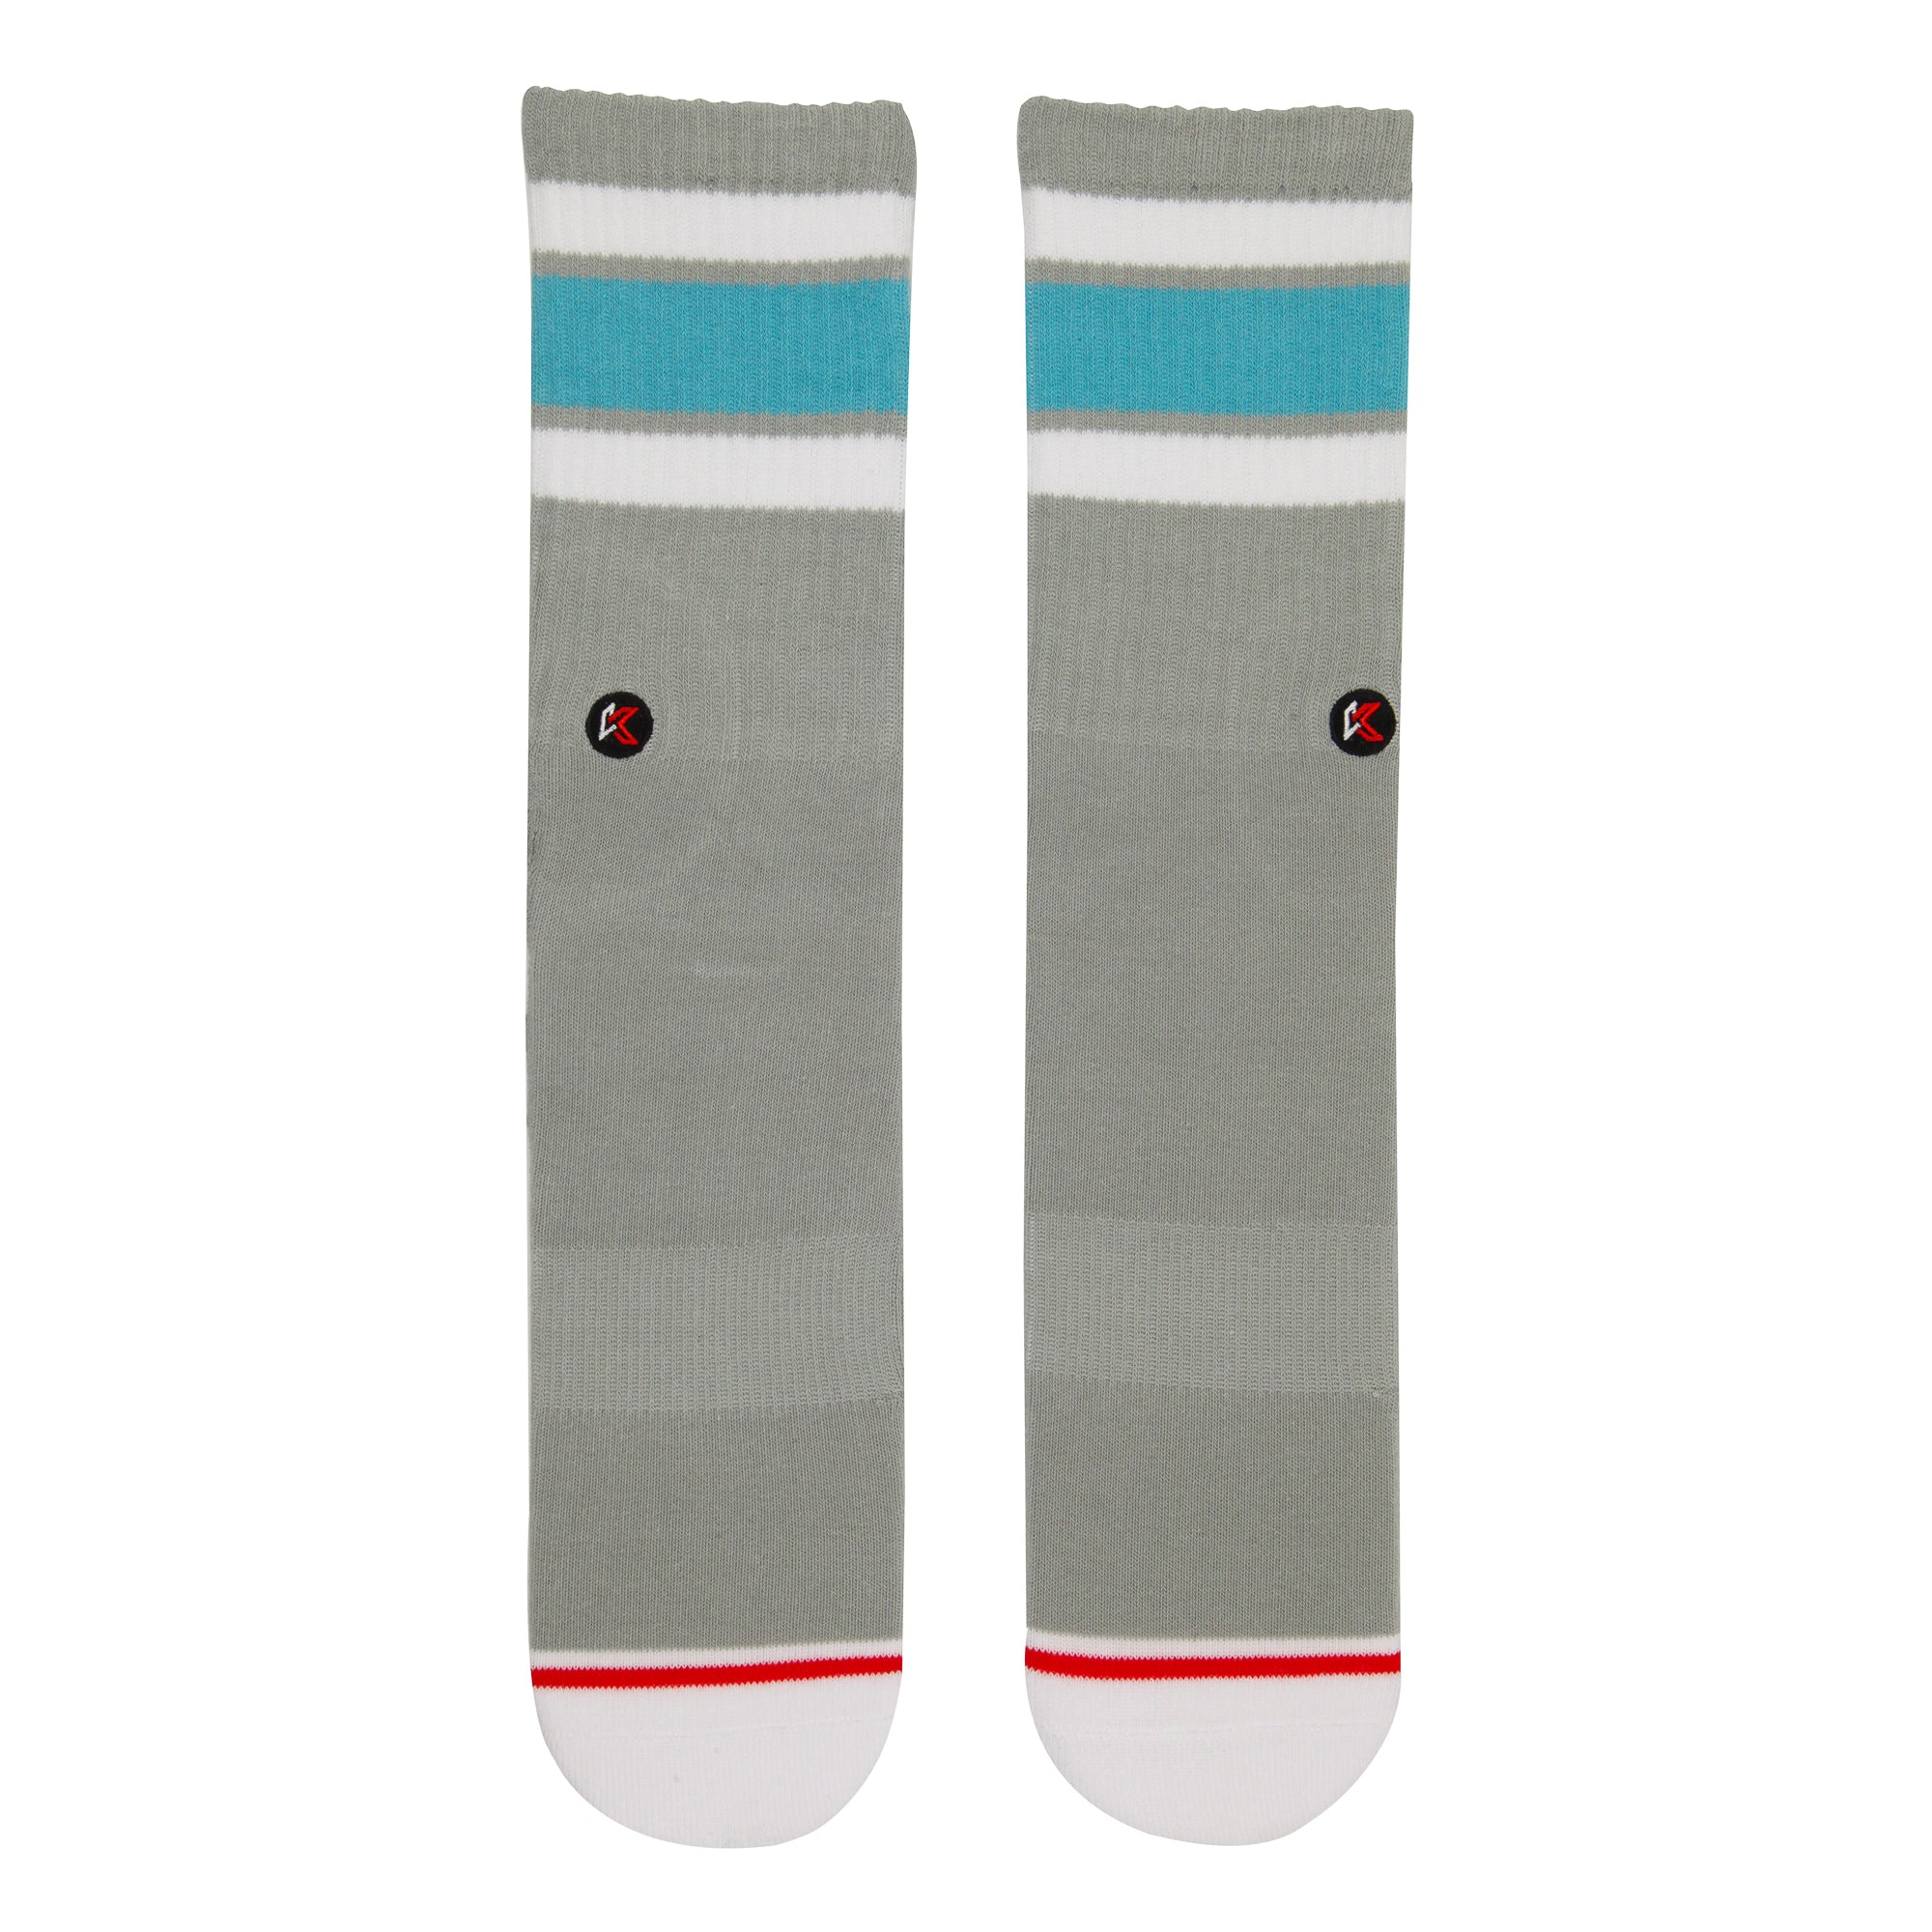 Grey Crew Sock